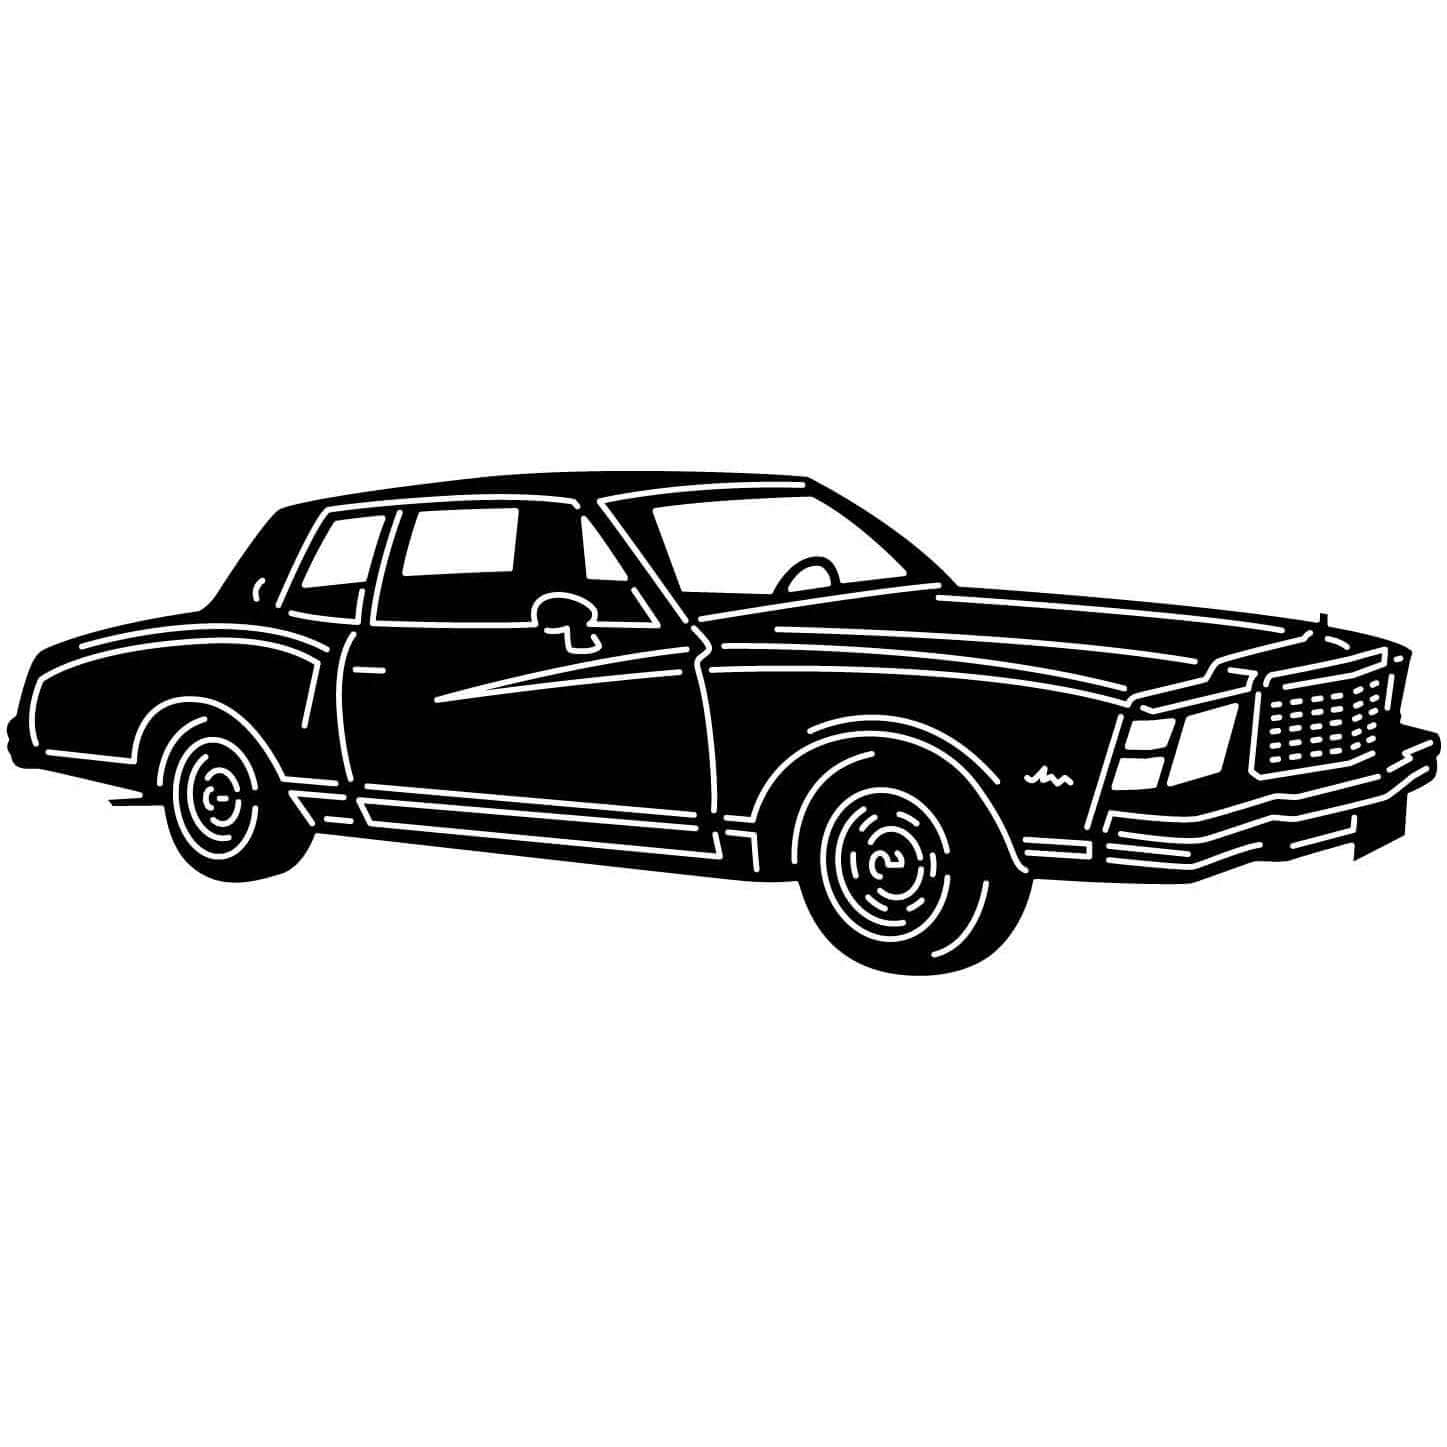 1979 Chevrolet Monte Carlo - The Kolor Of Money